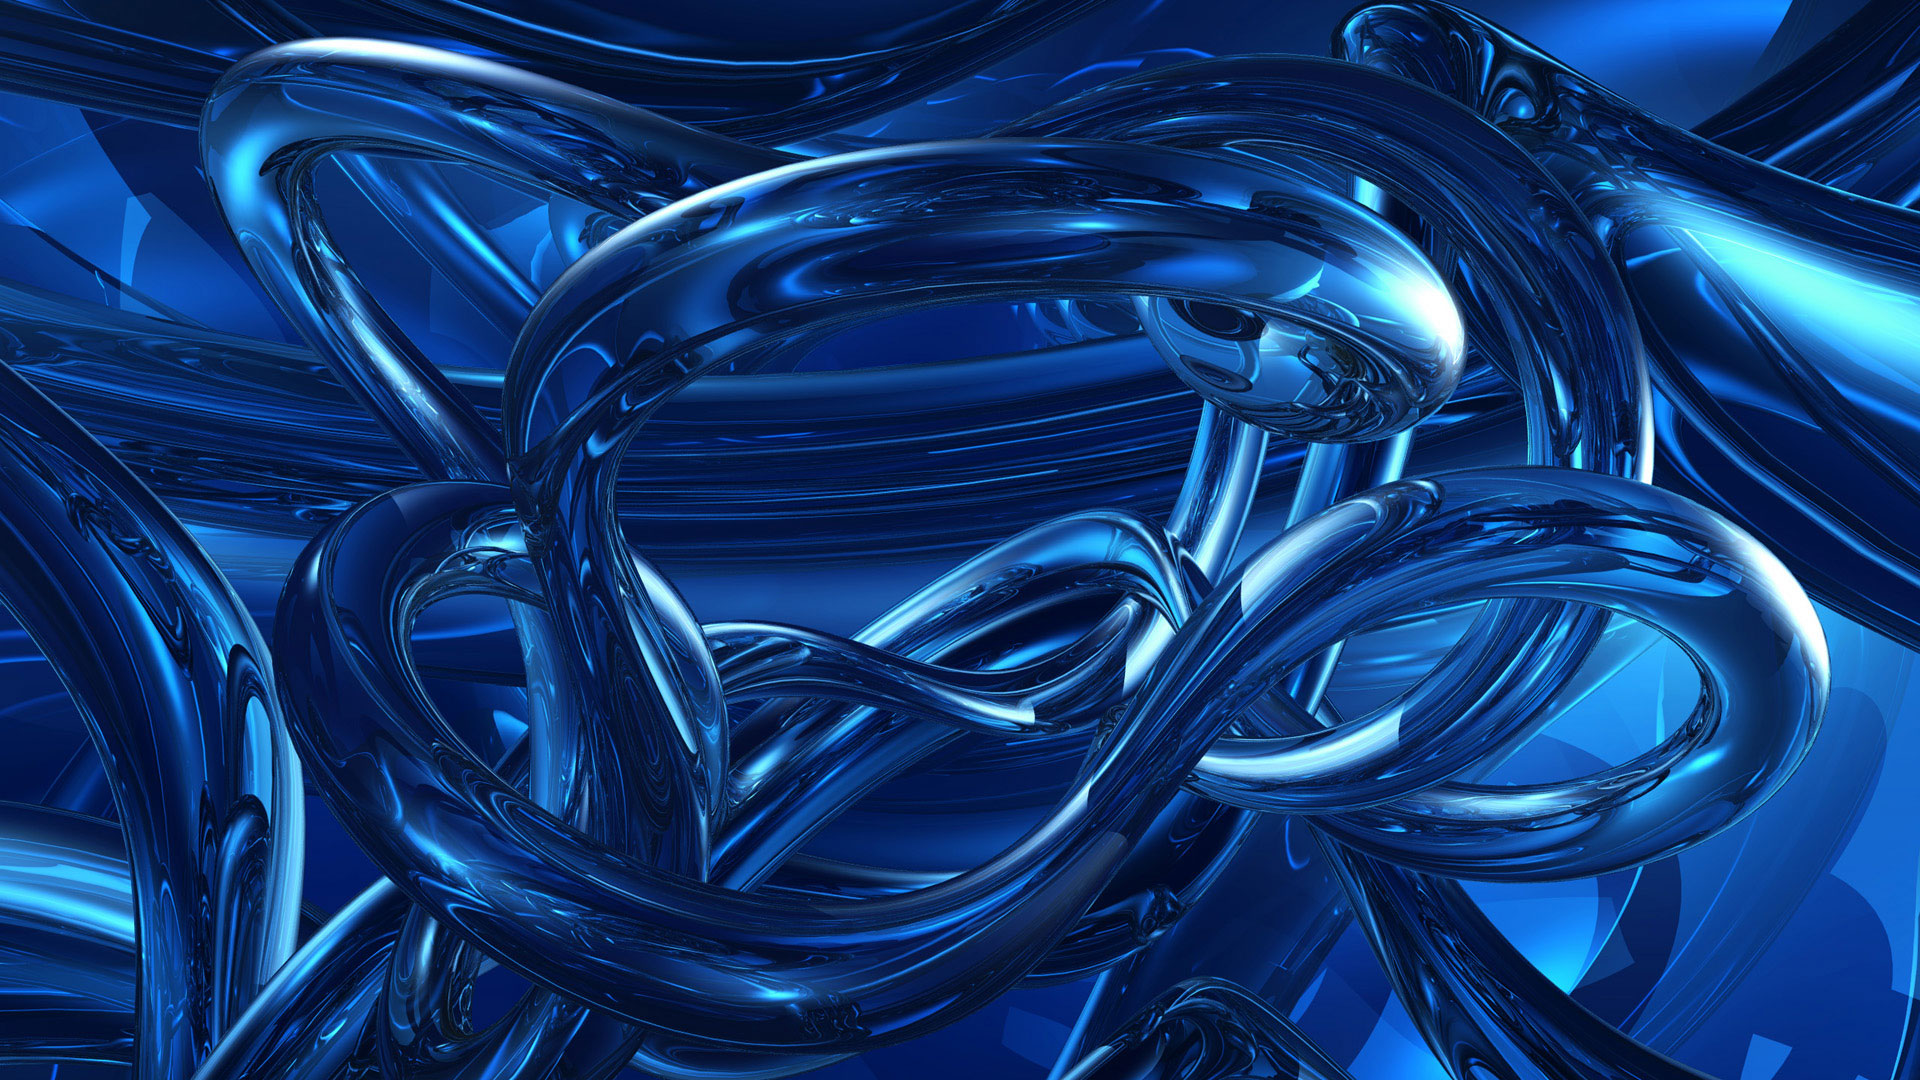 [46+] Blue Abstract Wallpaper for PC | WallpaperSafari.com